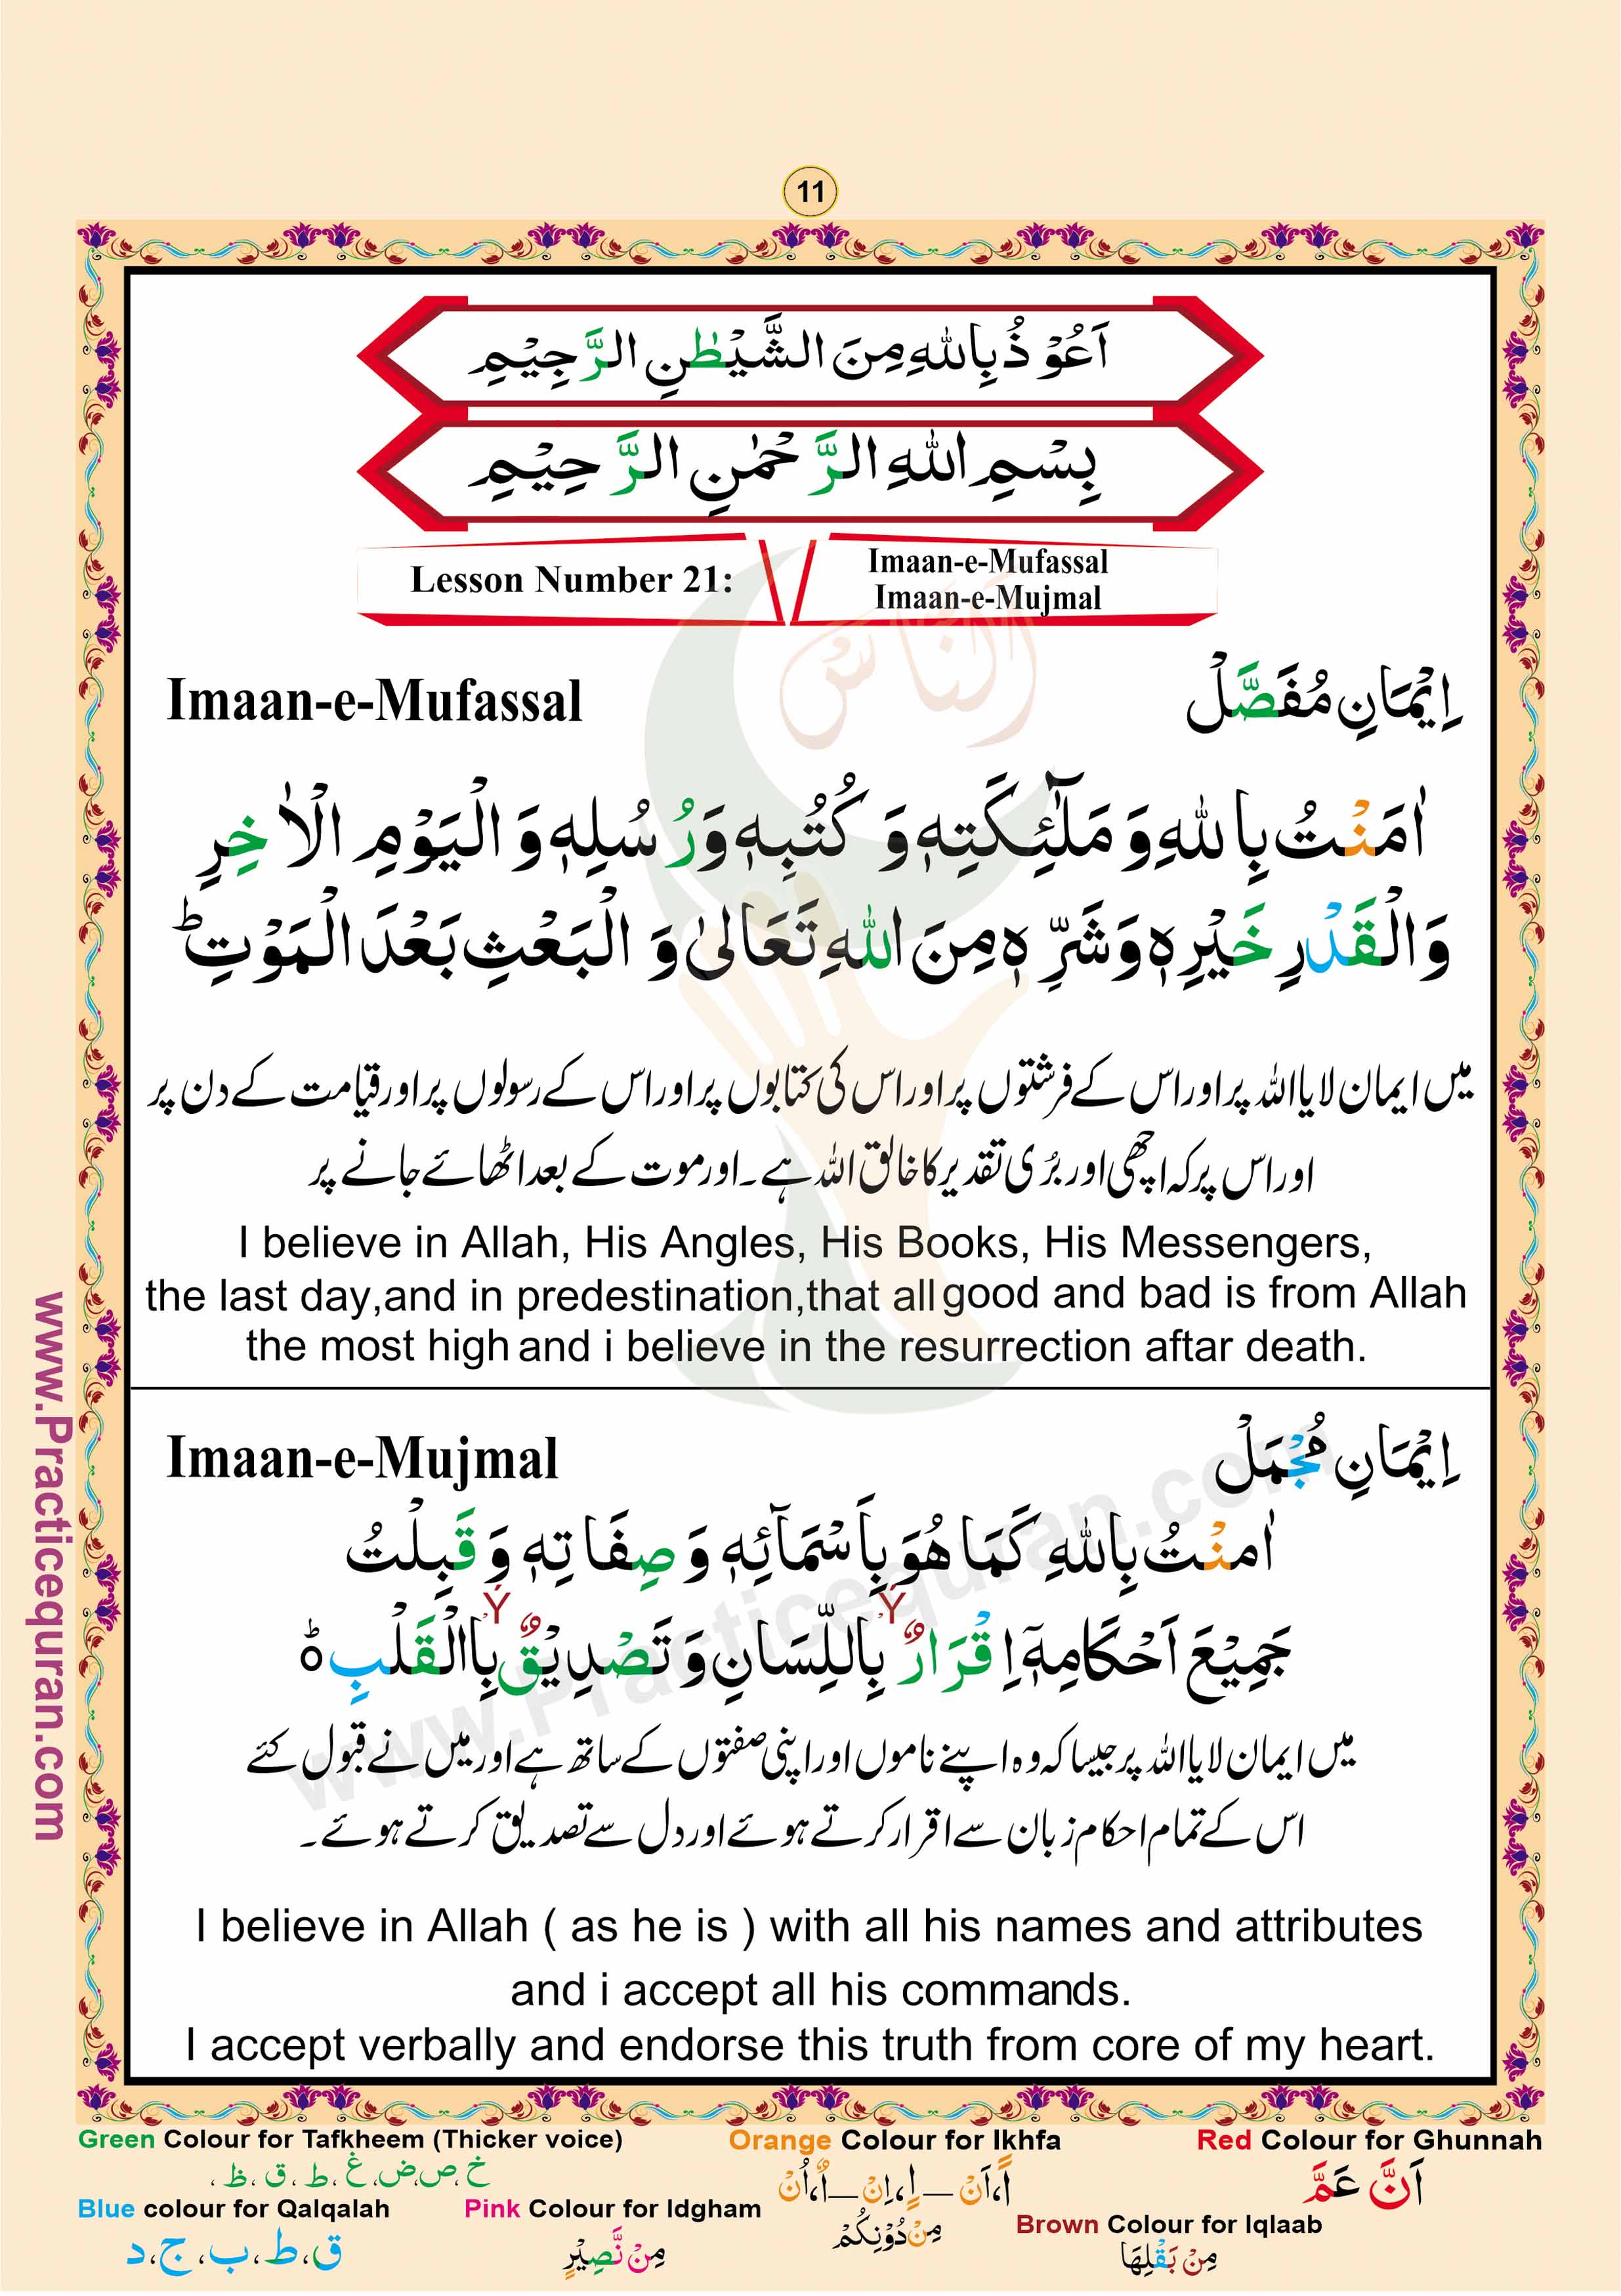 Read Namaz (Salah) Page No 11, Practice Quran